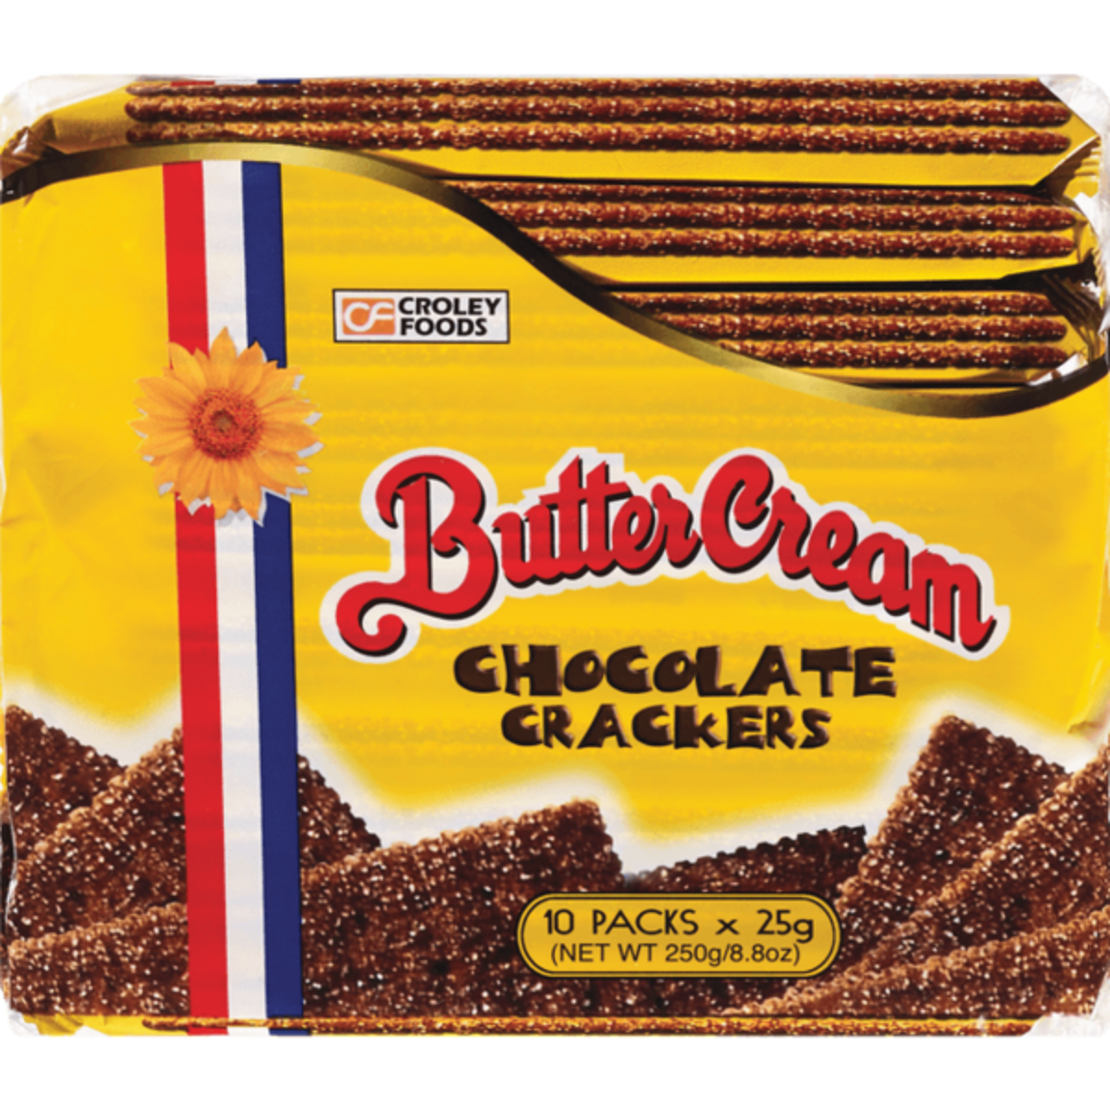 ButterCream - Chocolate Crackers